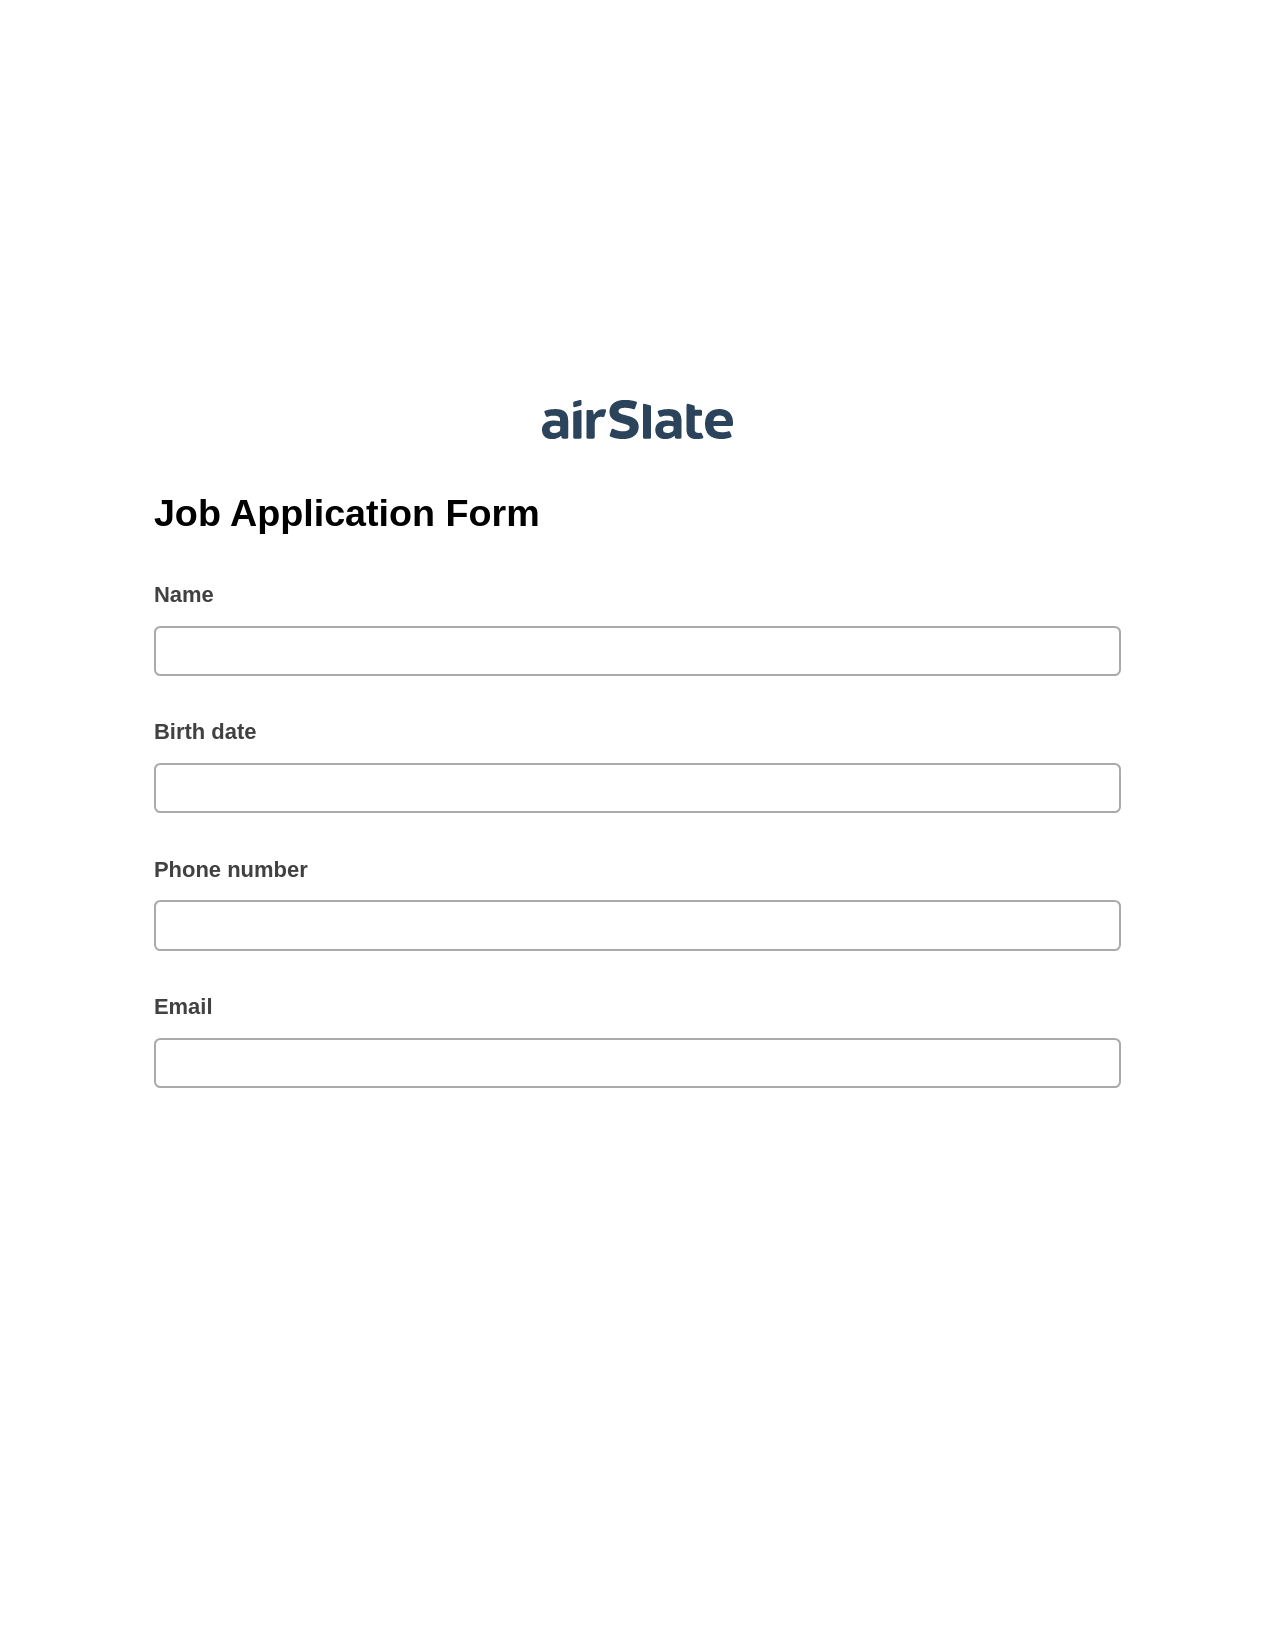 Multirole Job Application Form Pre-fill Slate from MS Dynamics 365 Records Bot, Google Sheet Two-Way Binding Bot, Post-finish Document Bot